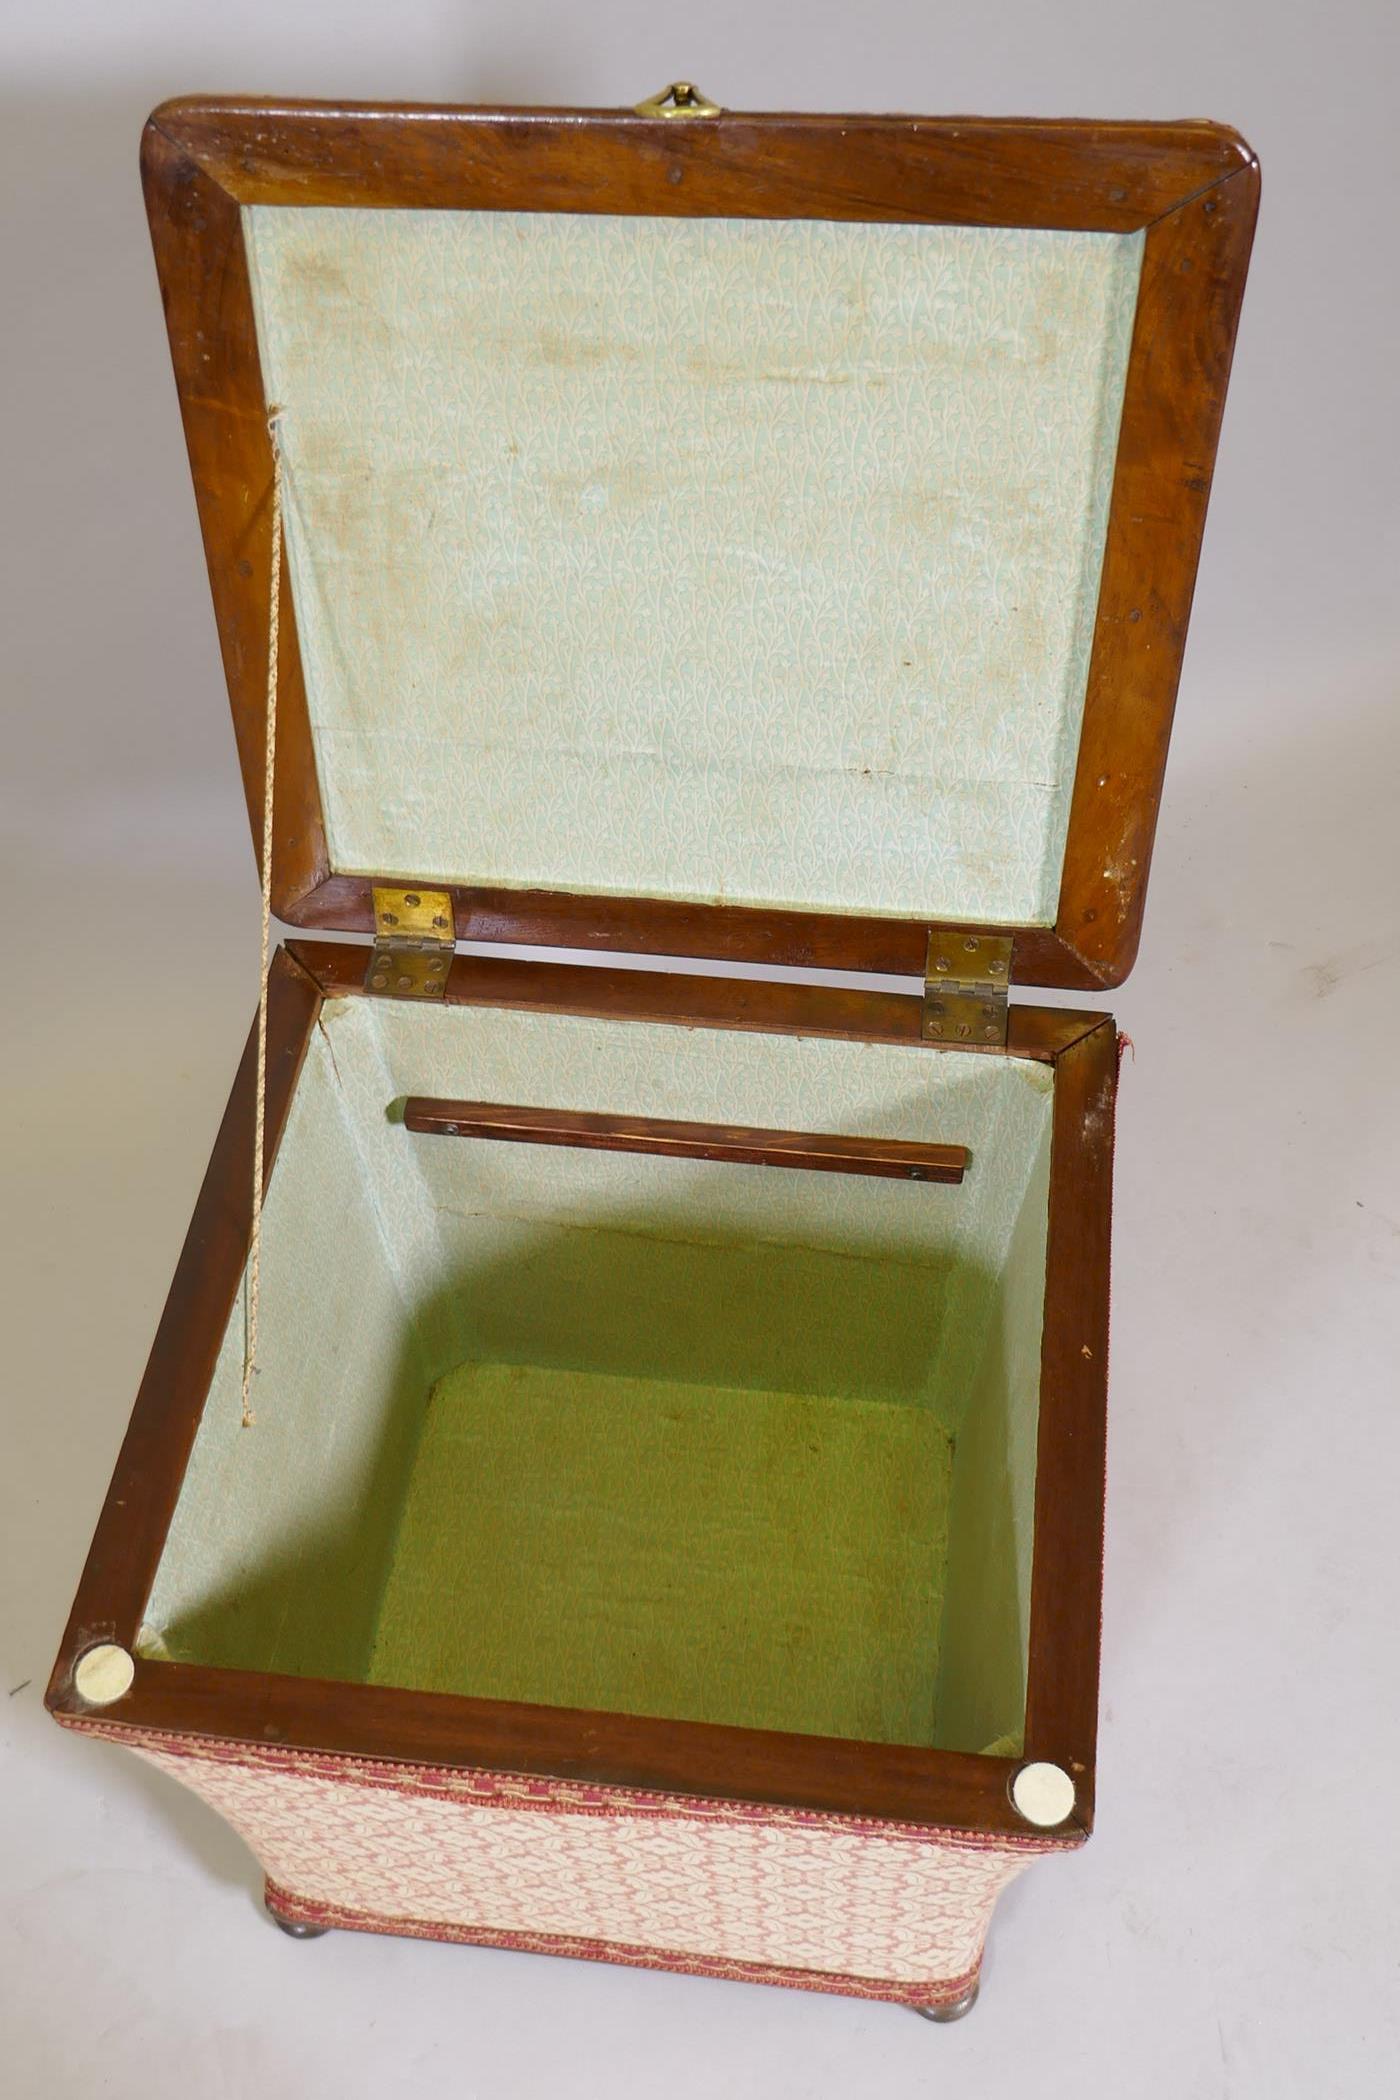 A C19th shaped workbox/stool, 16" x 15" x 16" - Image 3 of 3